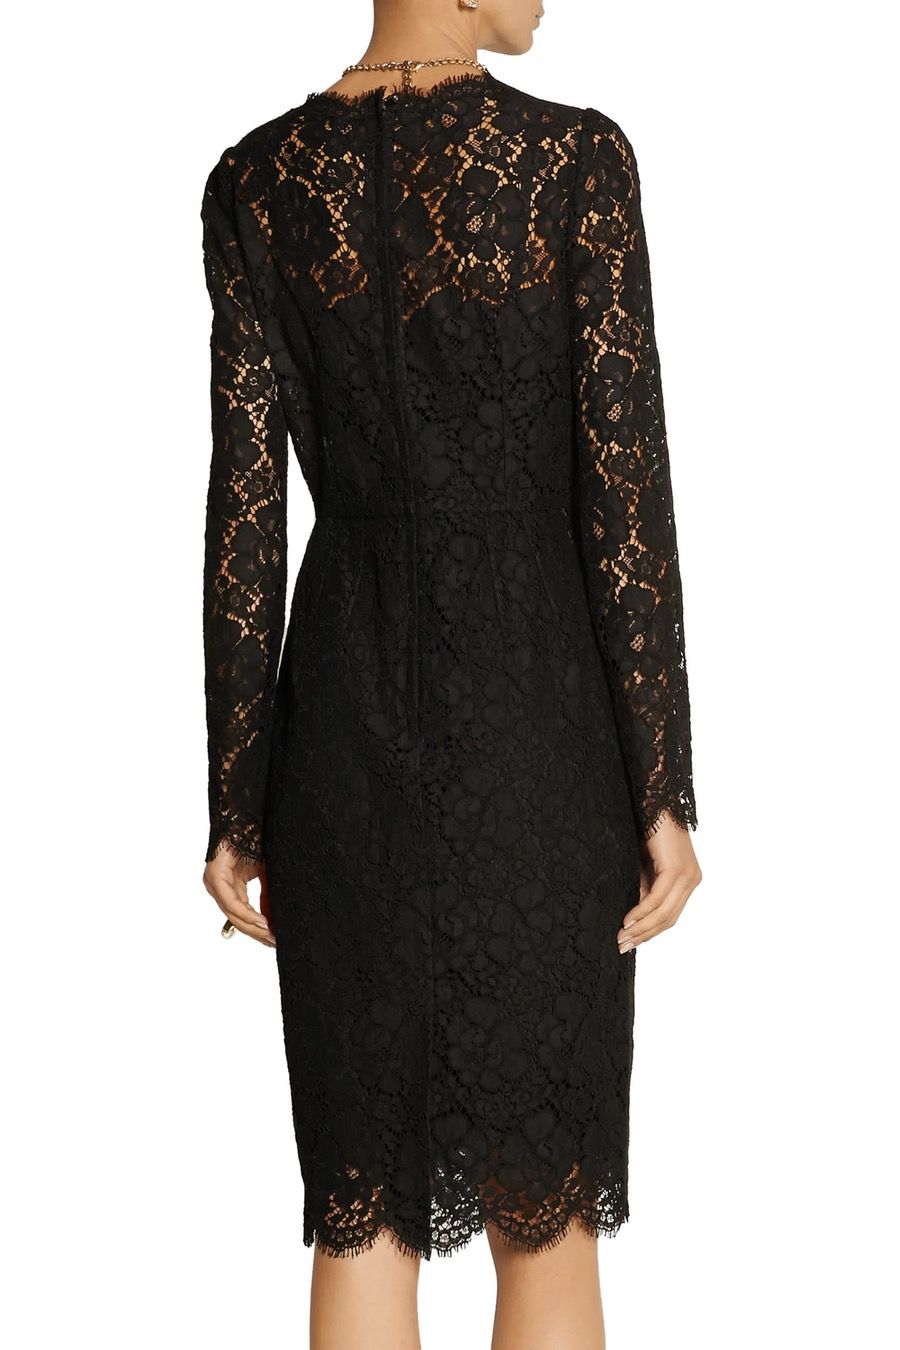 Kate Middleton S Dolce And Gabbana Black Lace Dress